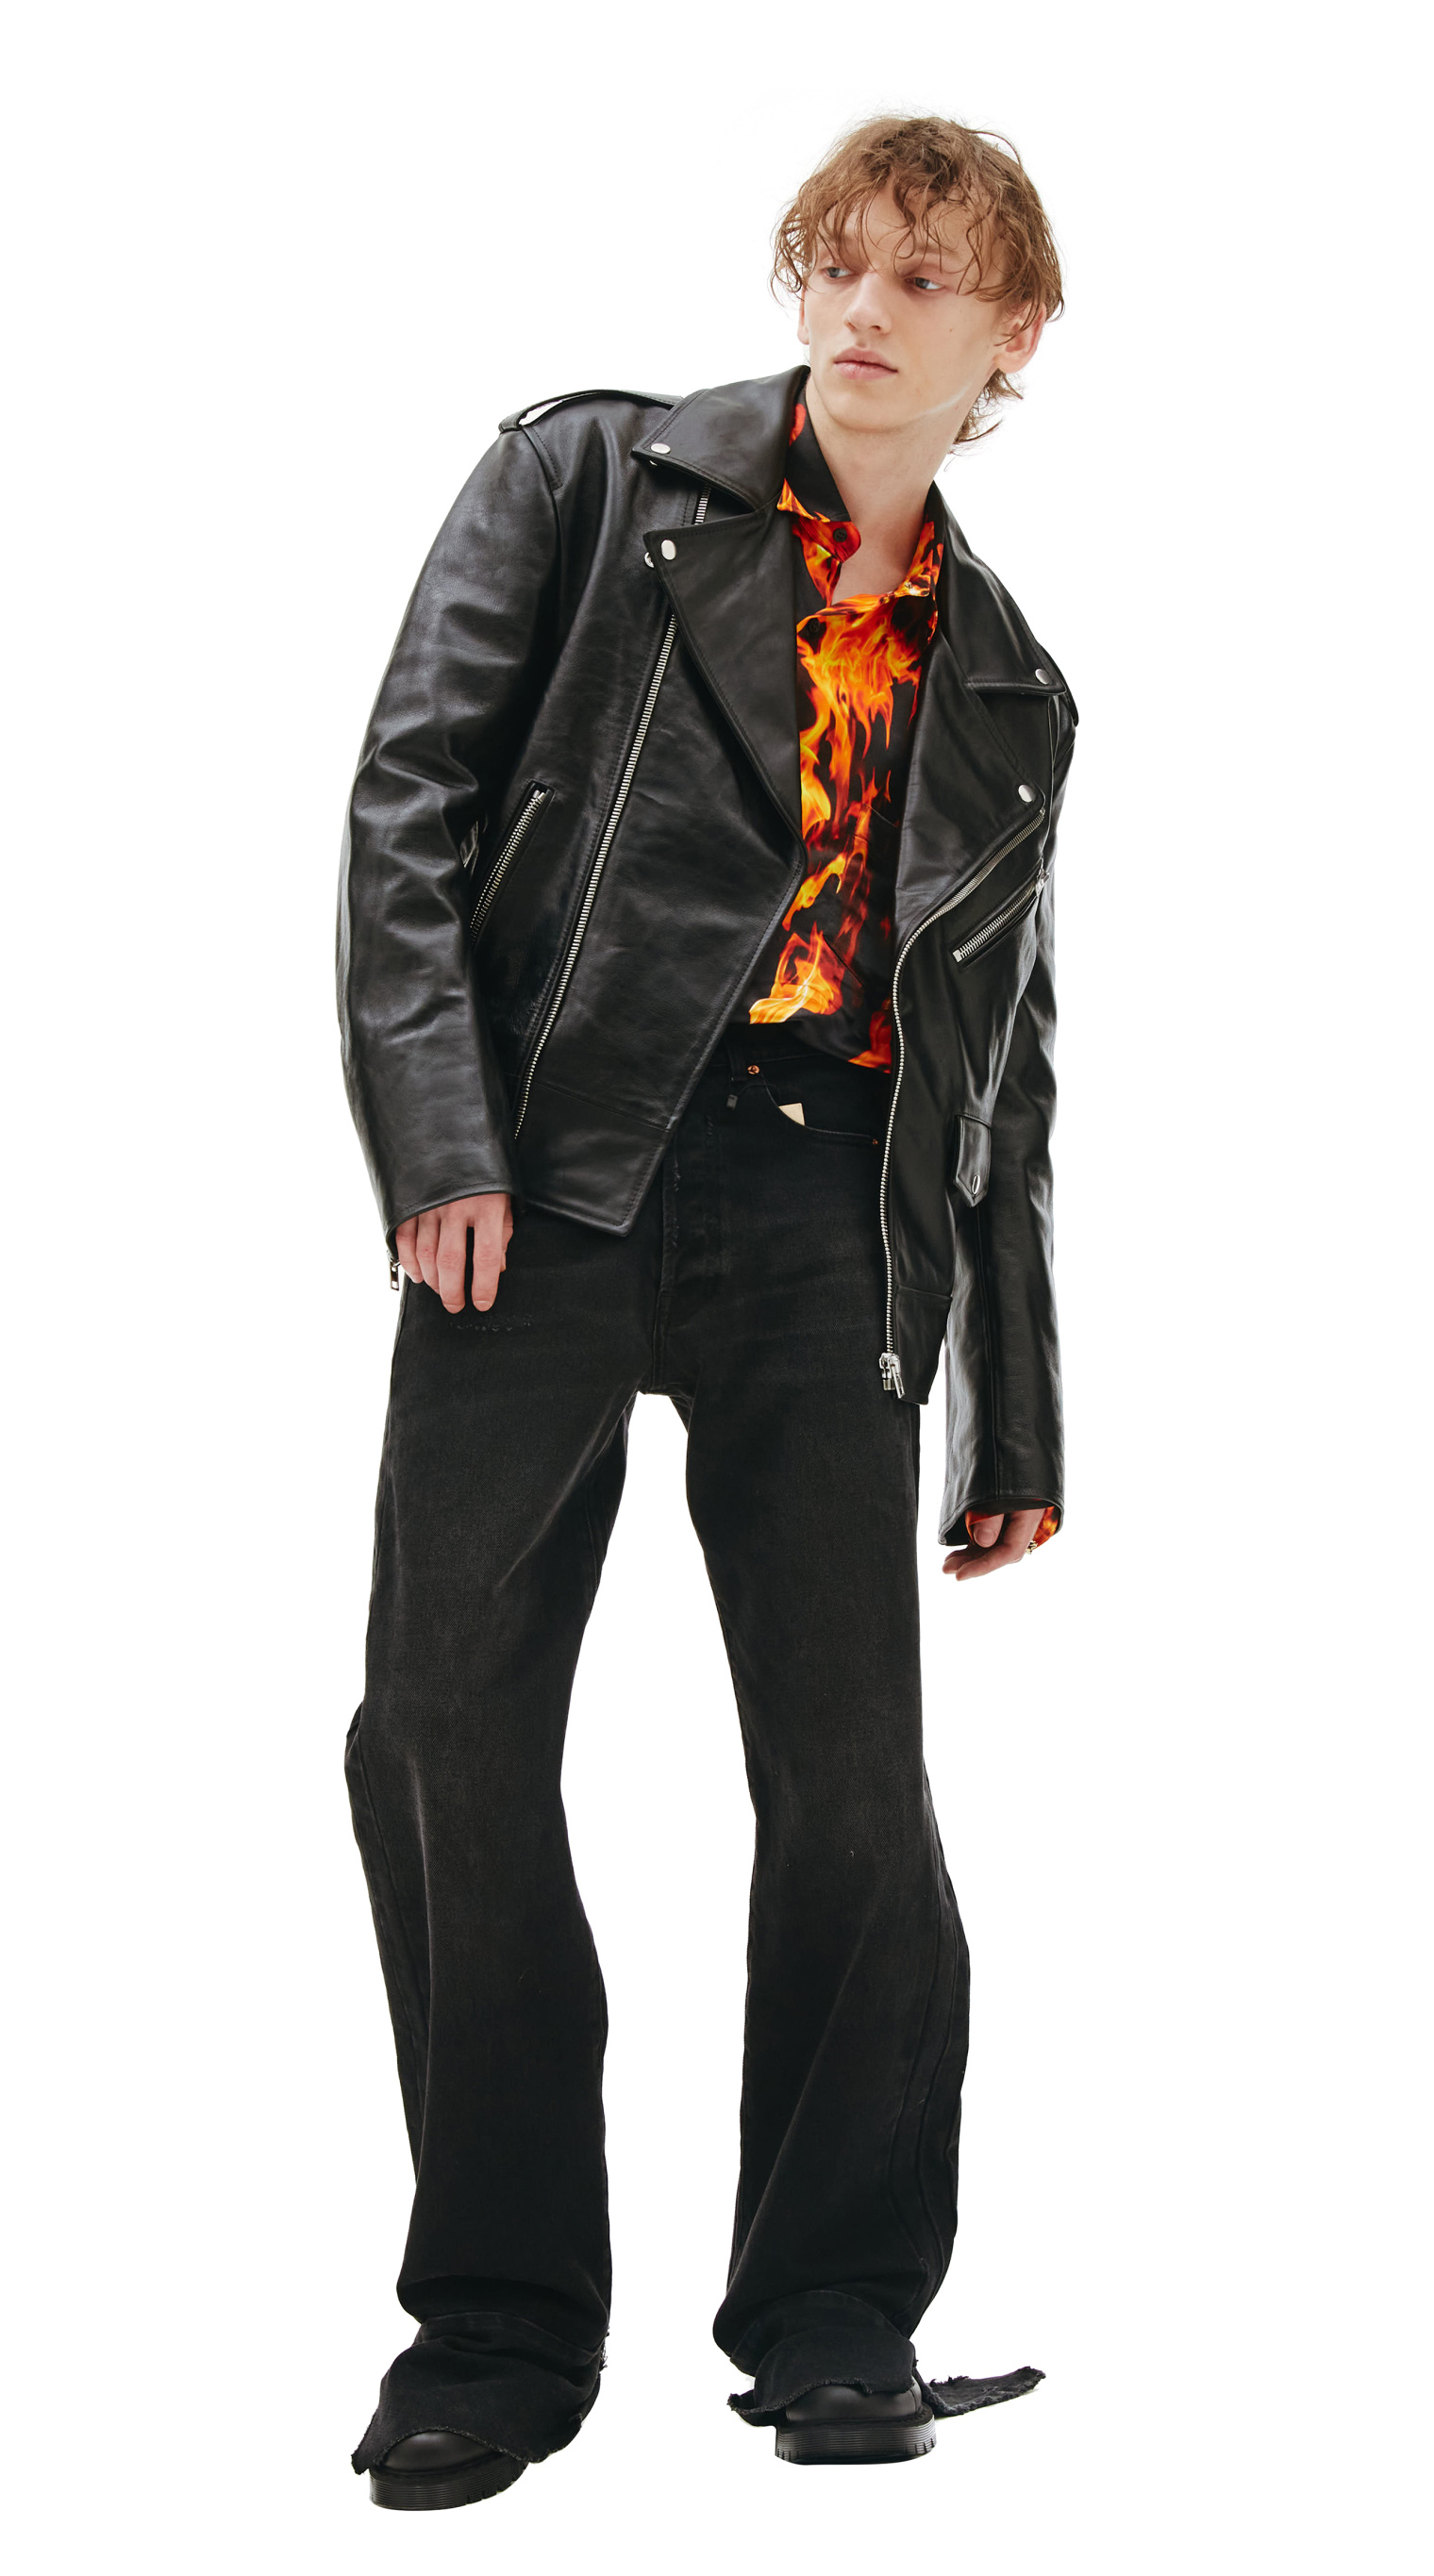 VETEMENTS Leather biker jacket